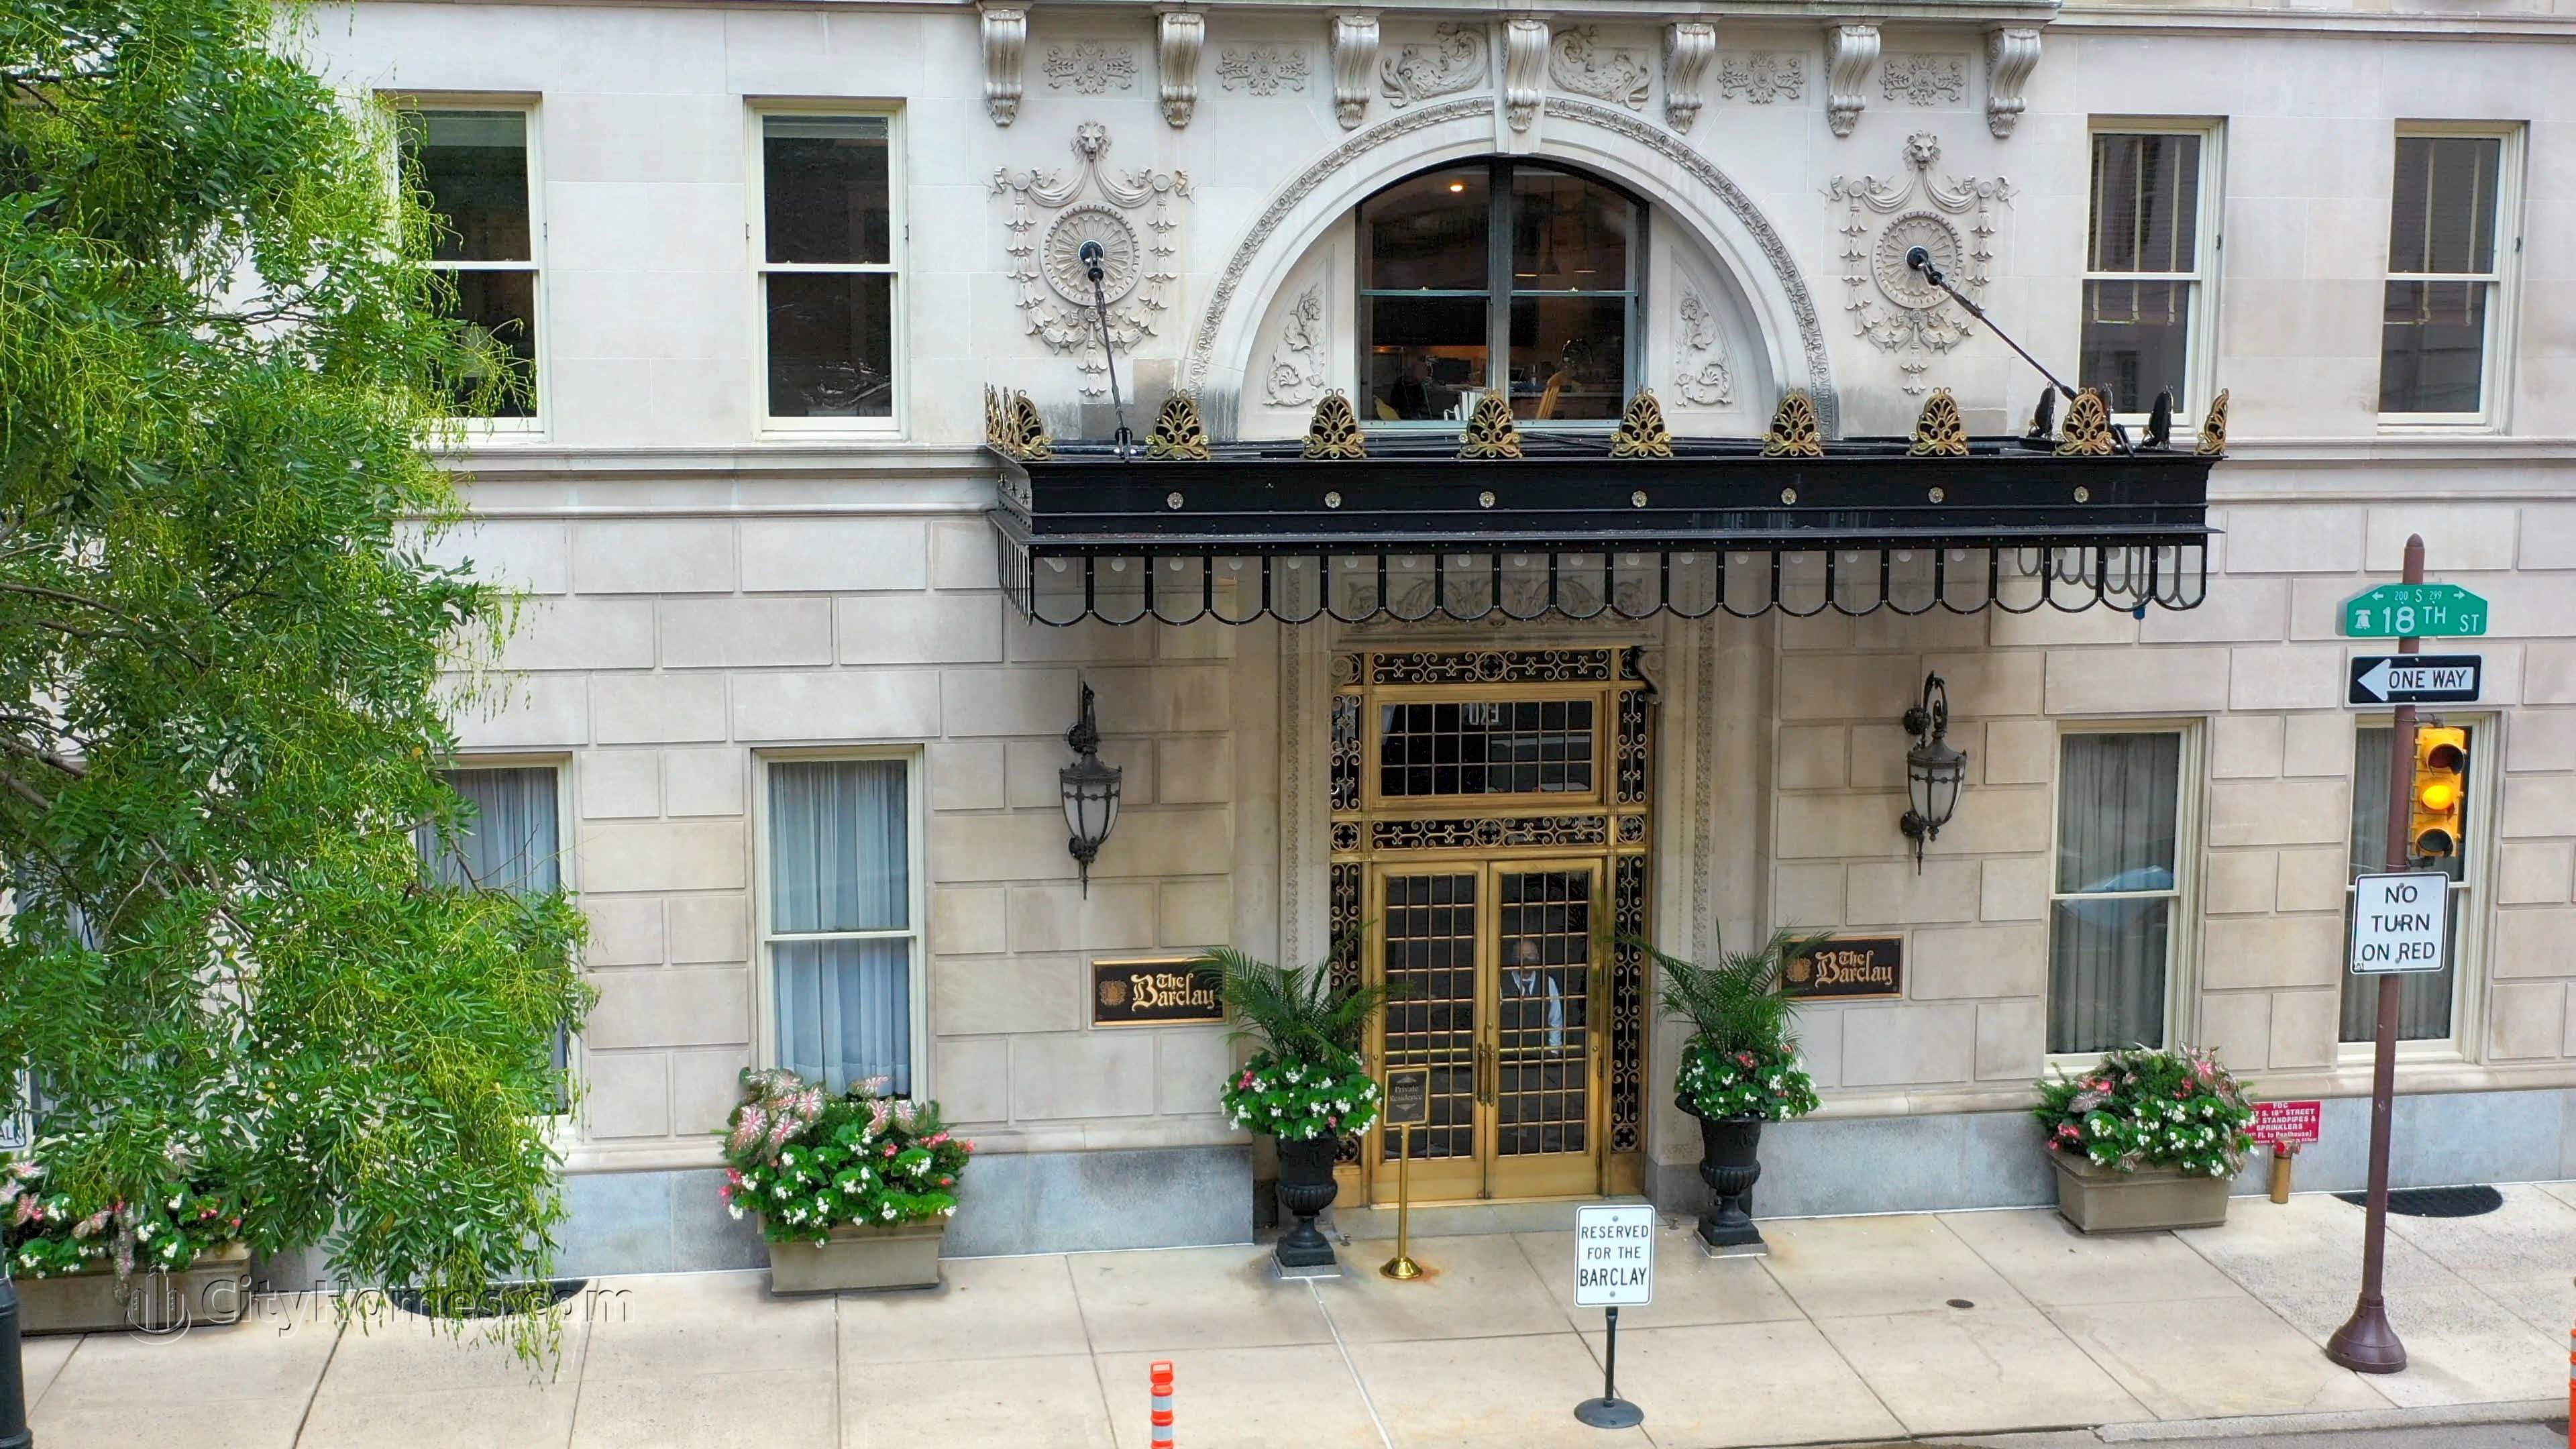 The Barclay здание в 237 S 18th St, Rittenhouse Square, Philadelphia, PA 19103